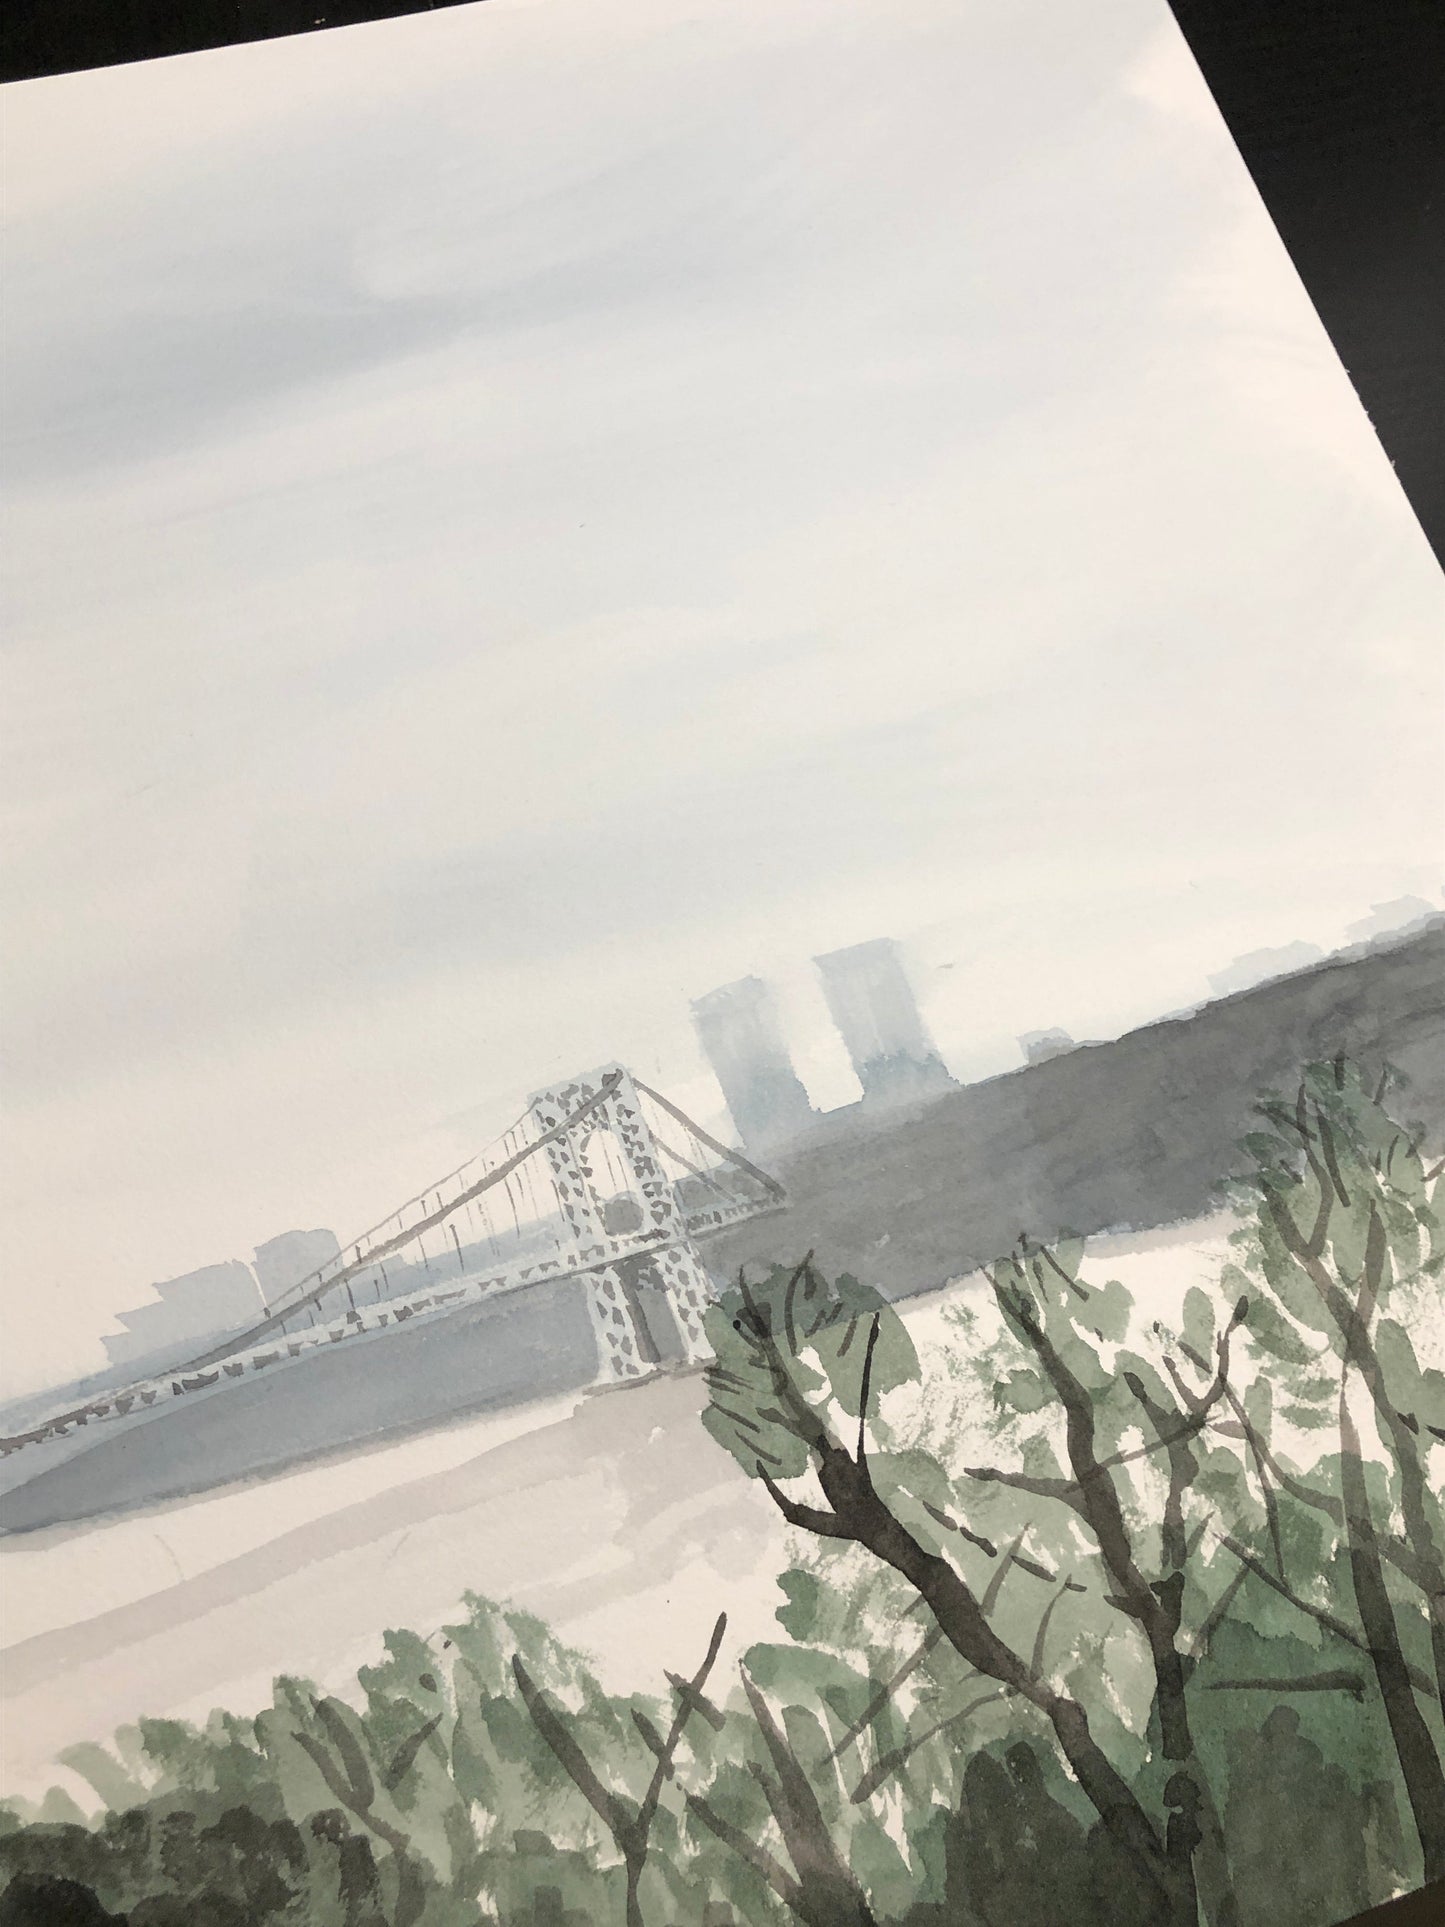 Foggy Bridge and Hudson River